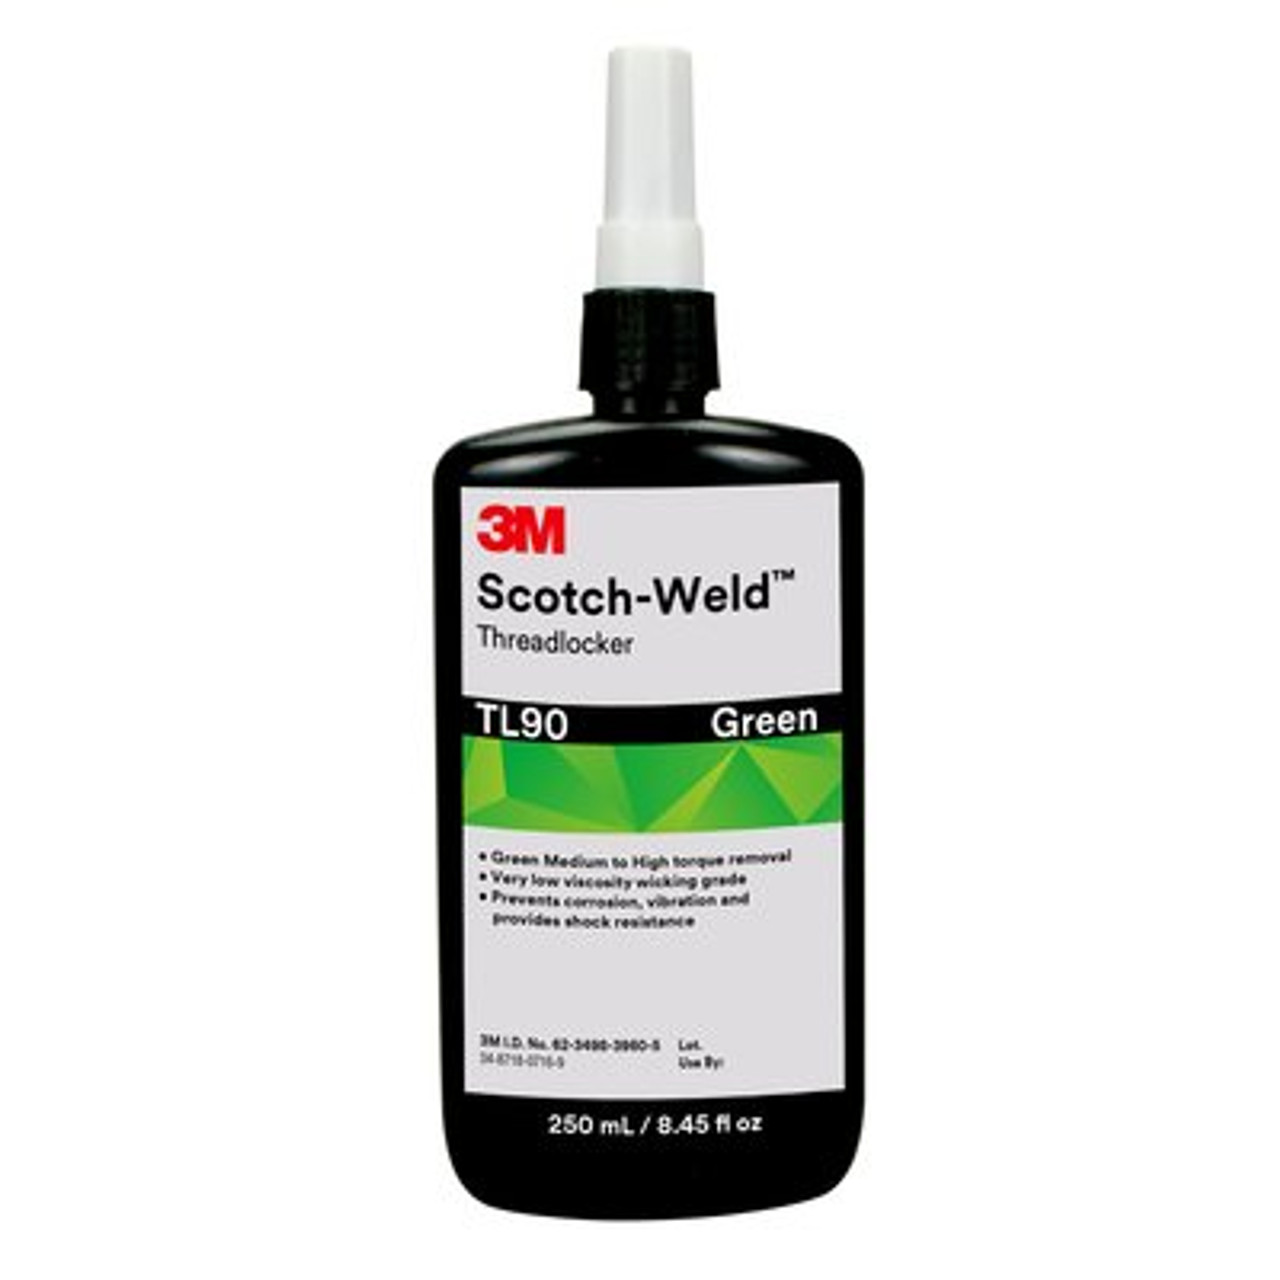 3M™ Scotch-Weld™ Threadlocker TL90, Green, 250 mL Bottle